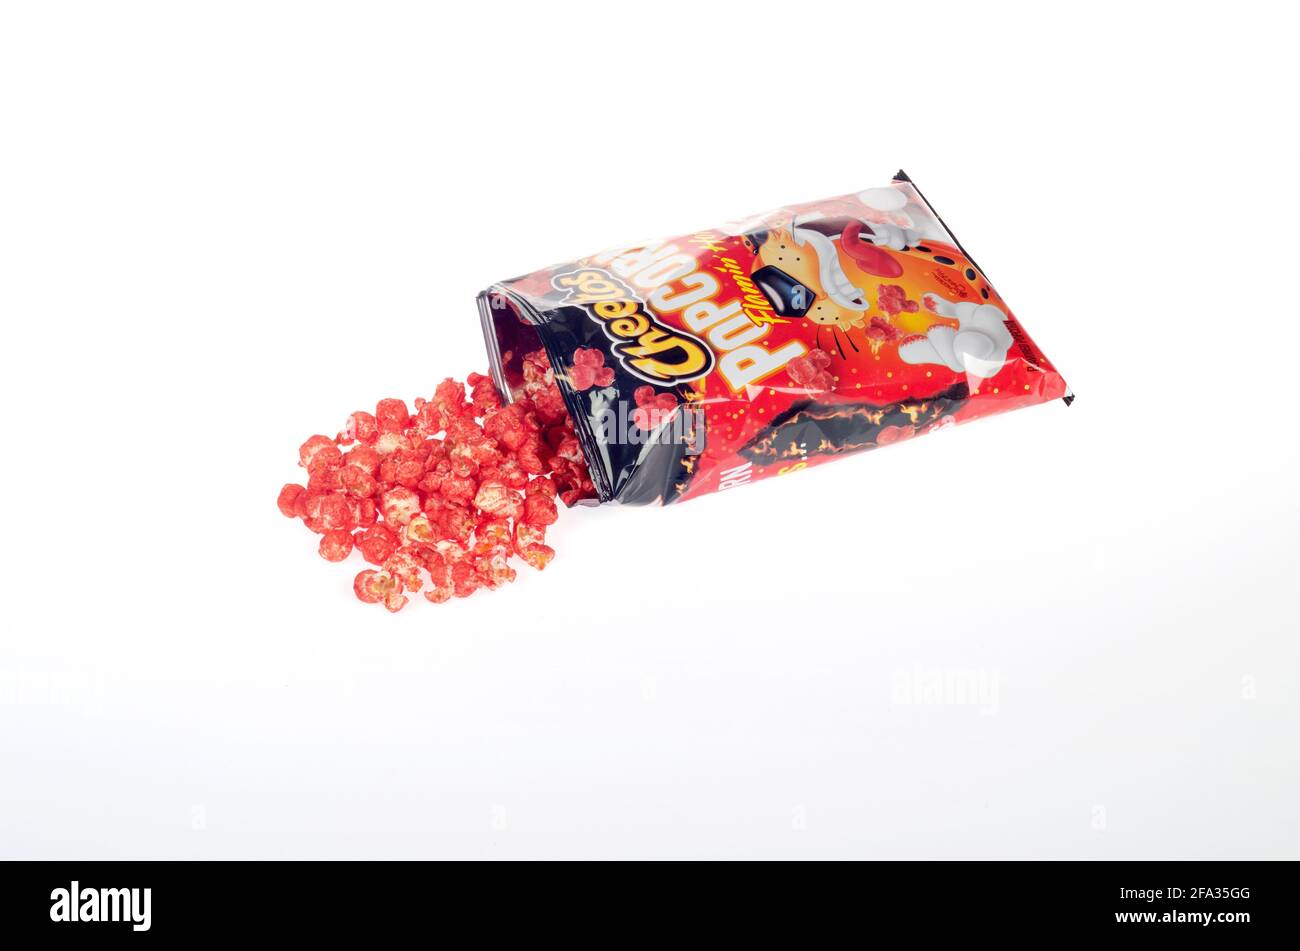 Cheetos Flamin’ Hot Popcorn Stock Photo